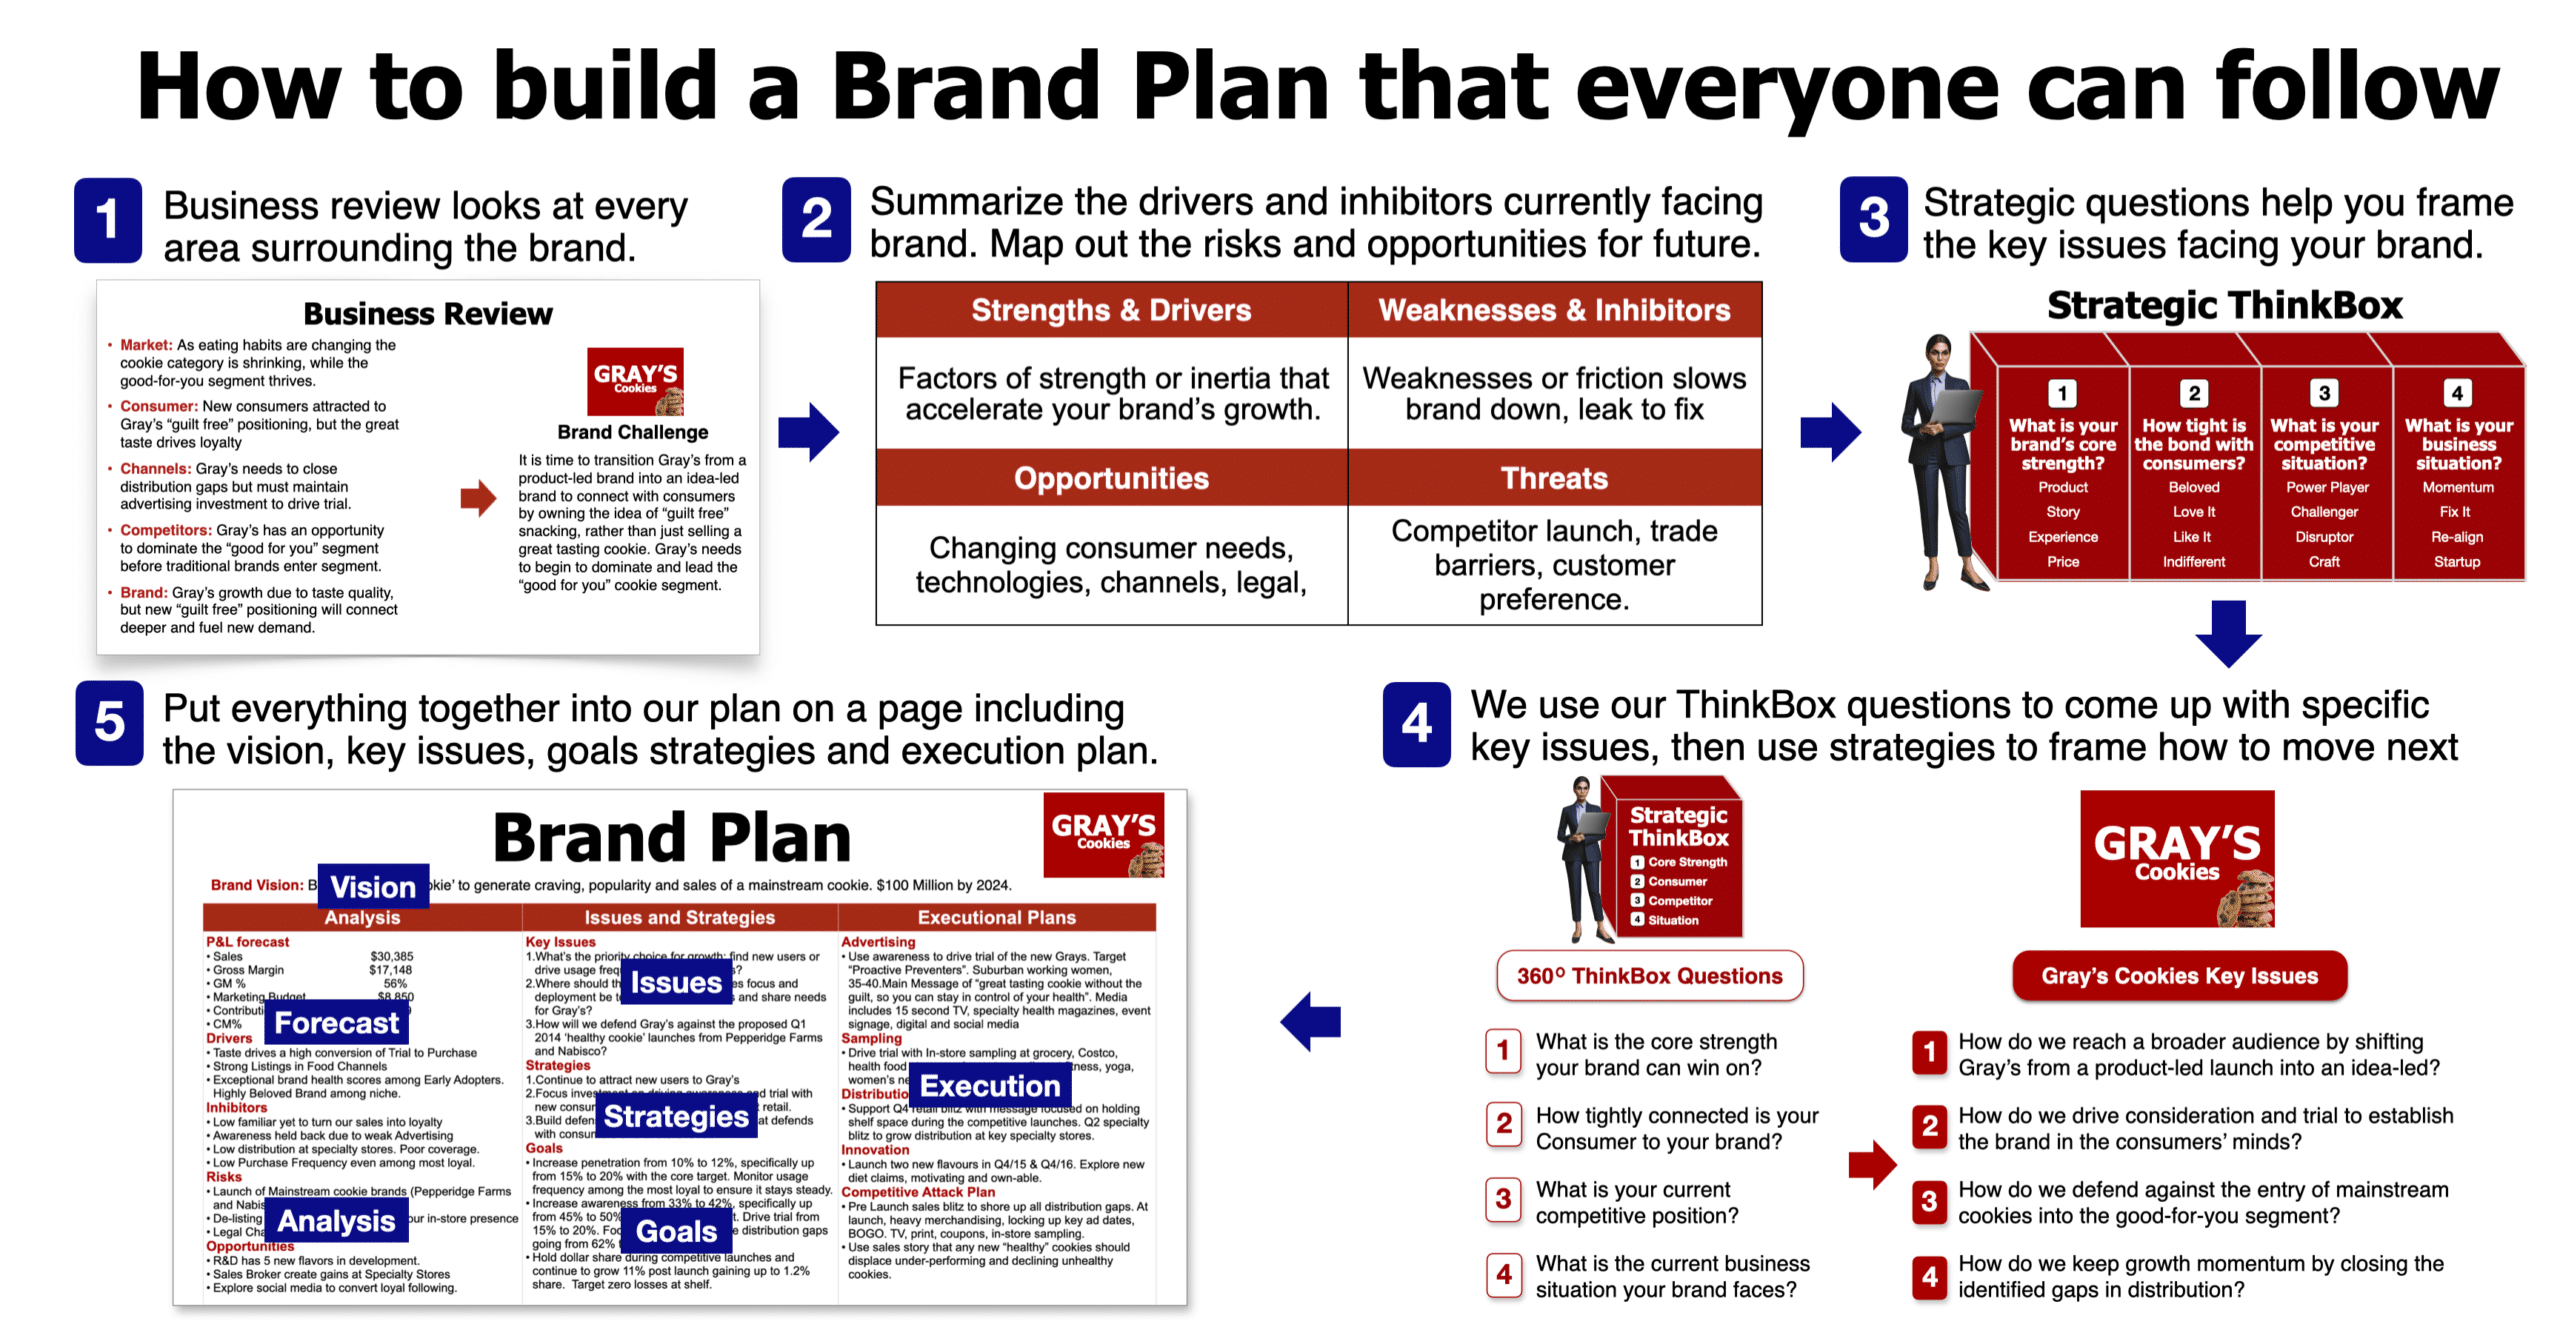 Brand Management skills in brand plans